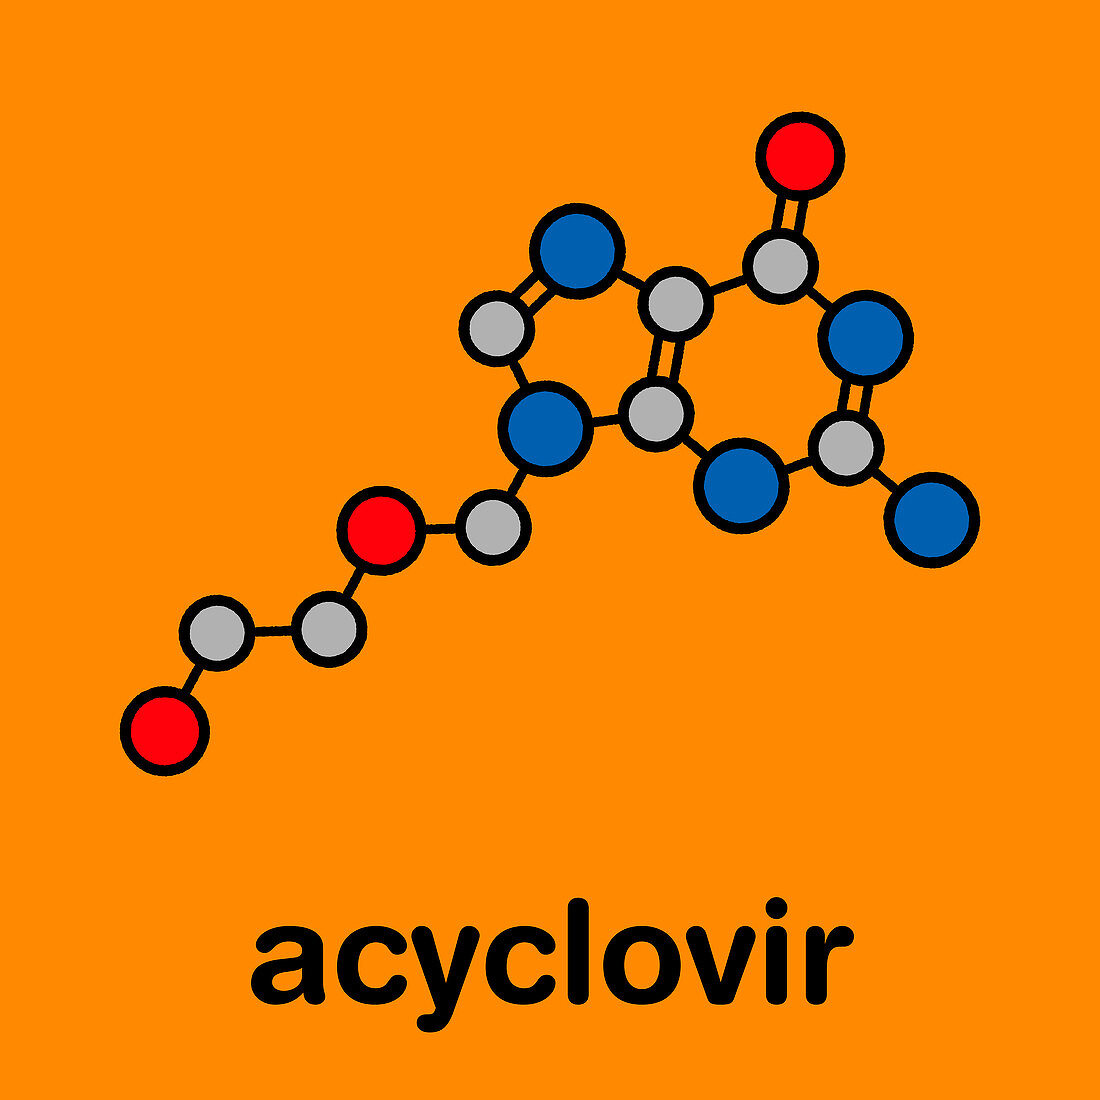 Acyclovir antiviral drug, molecular model